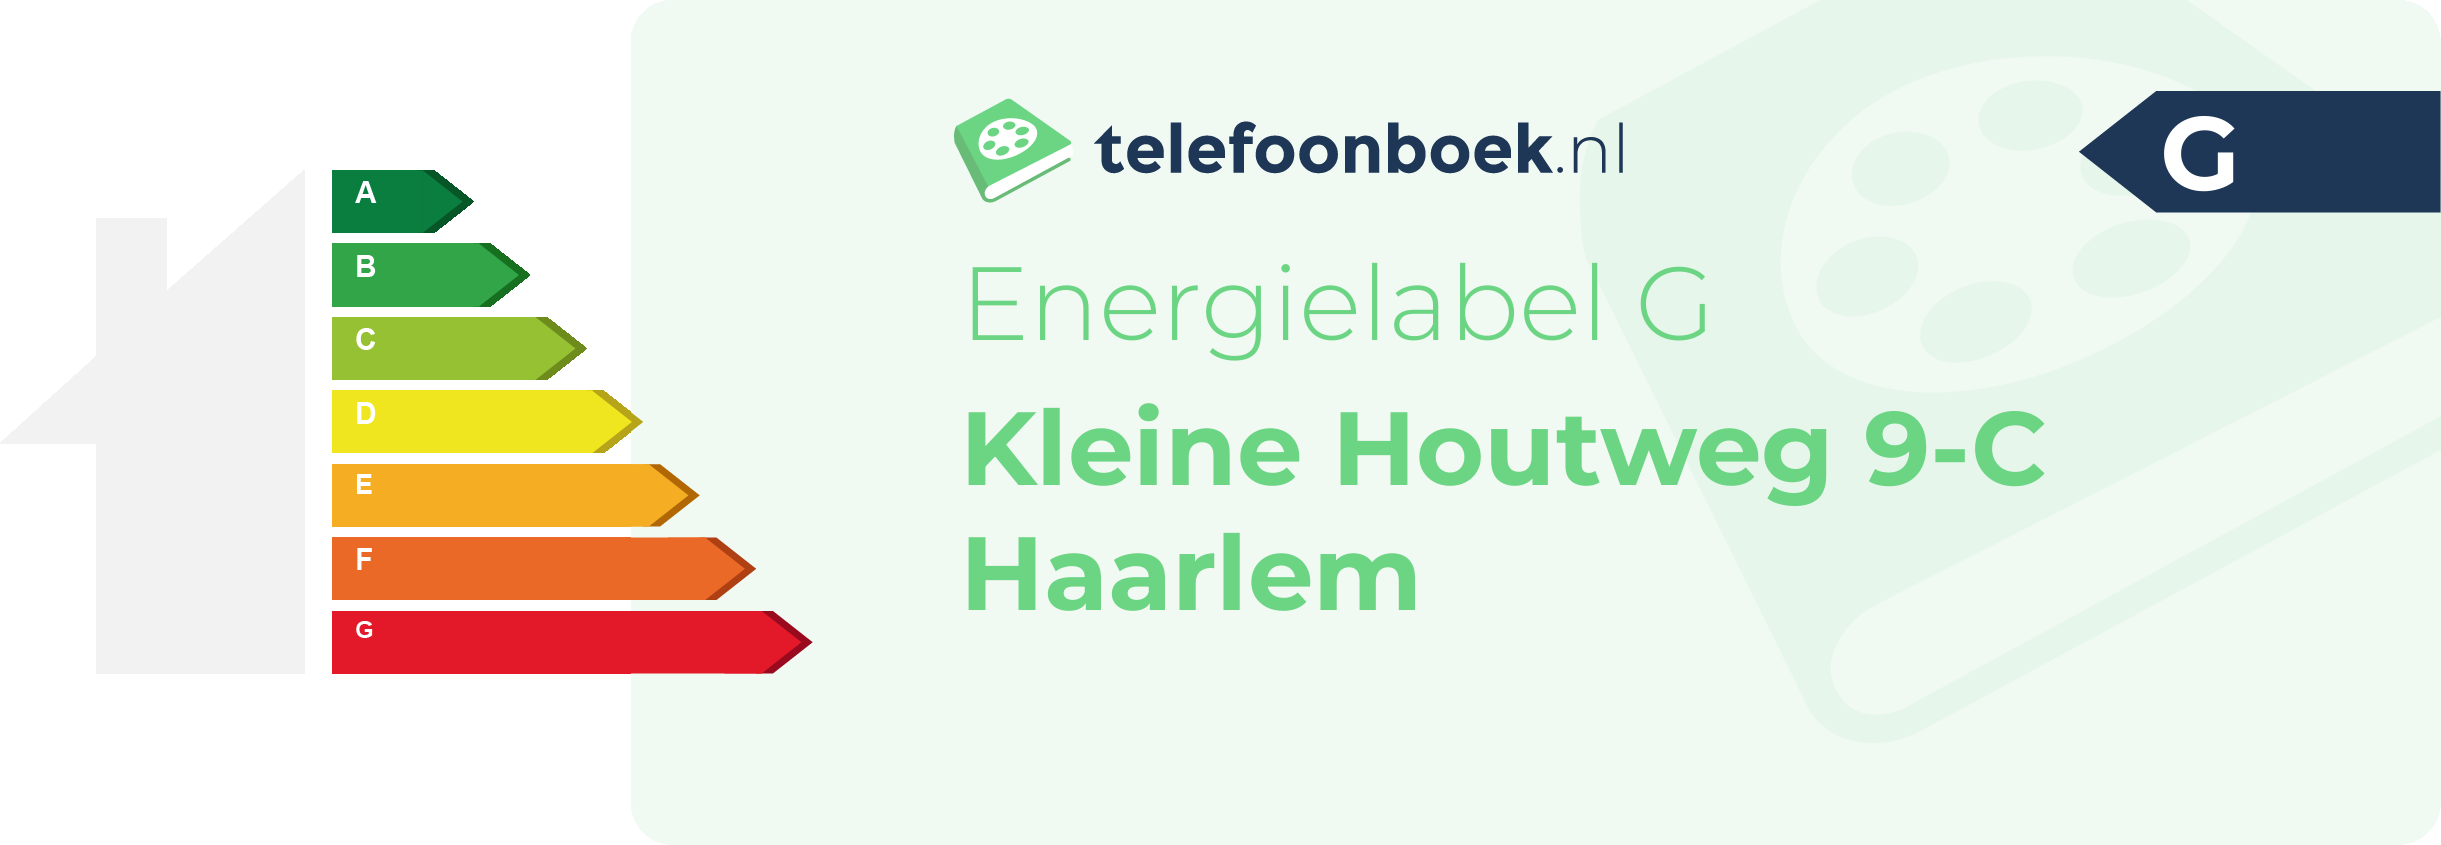 Energielabel Kleine Houtweg 9-C Haarlem